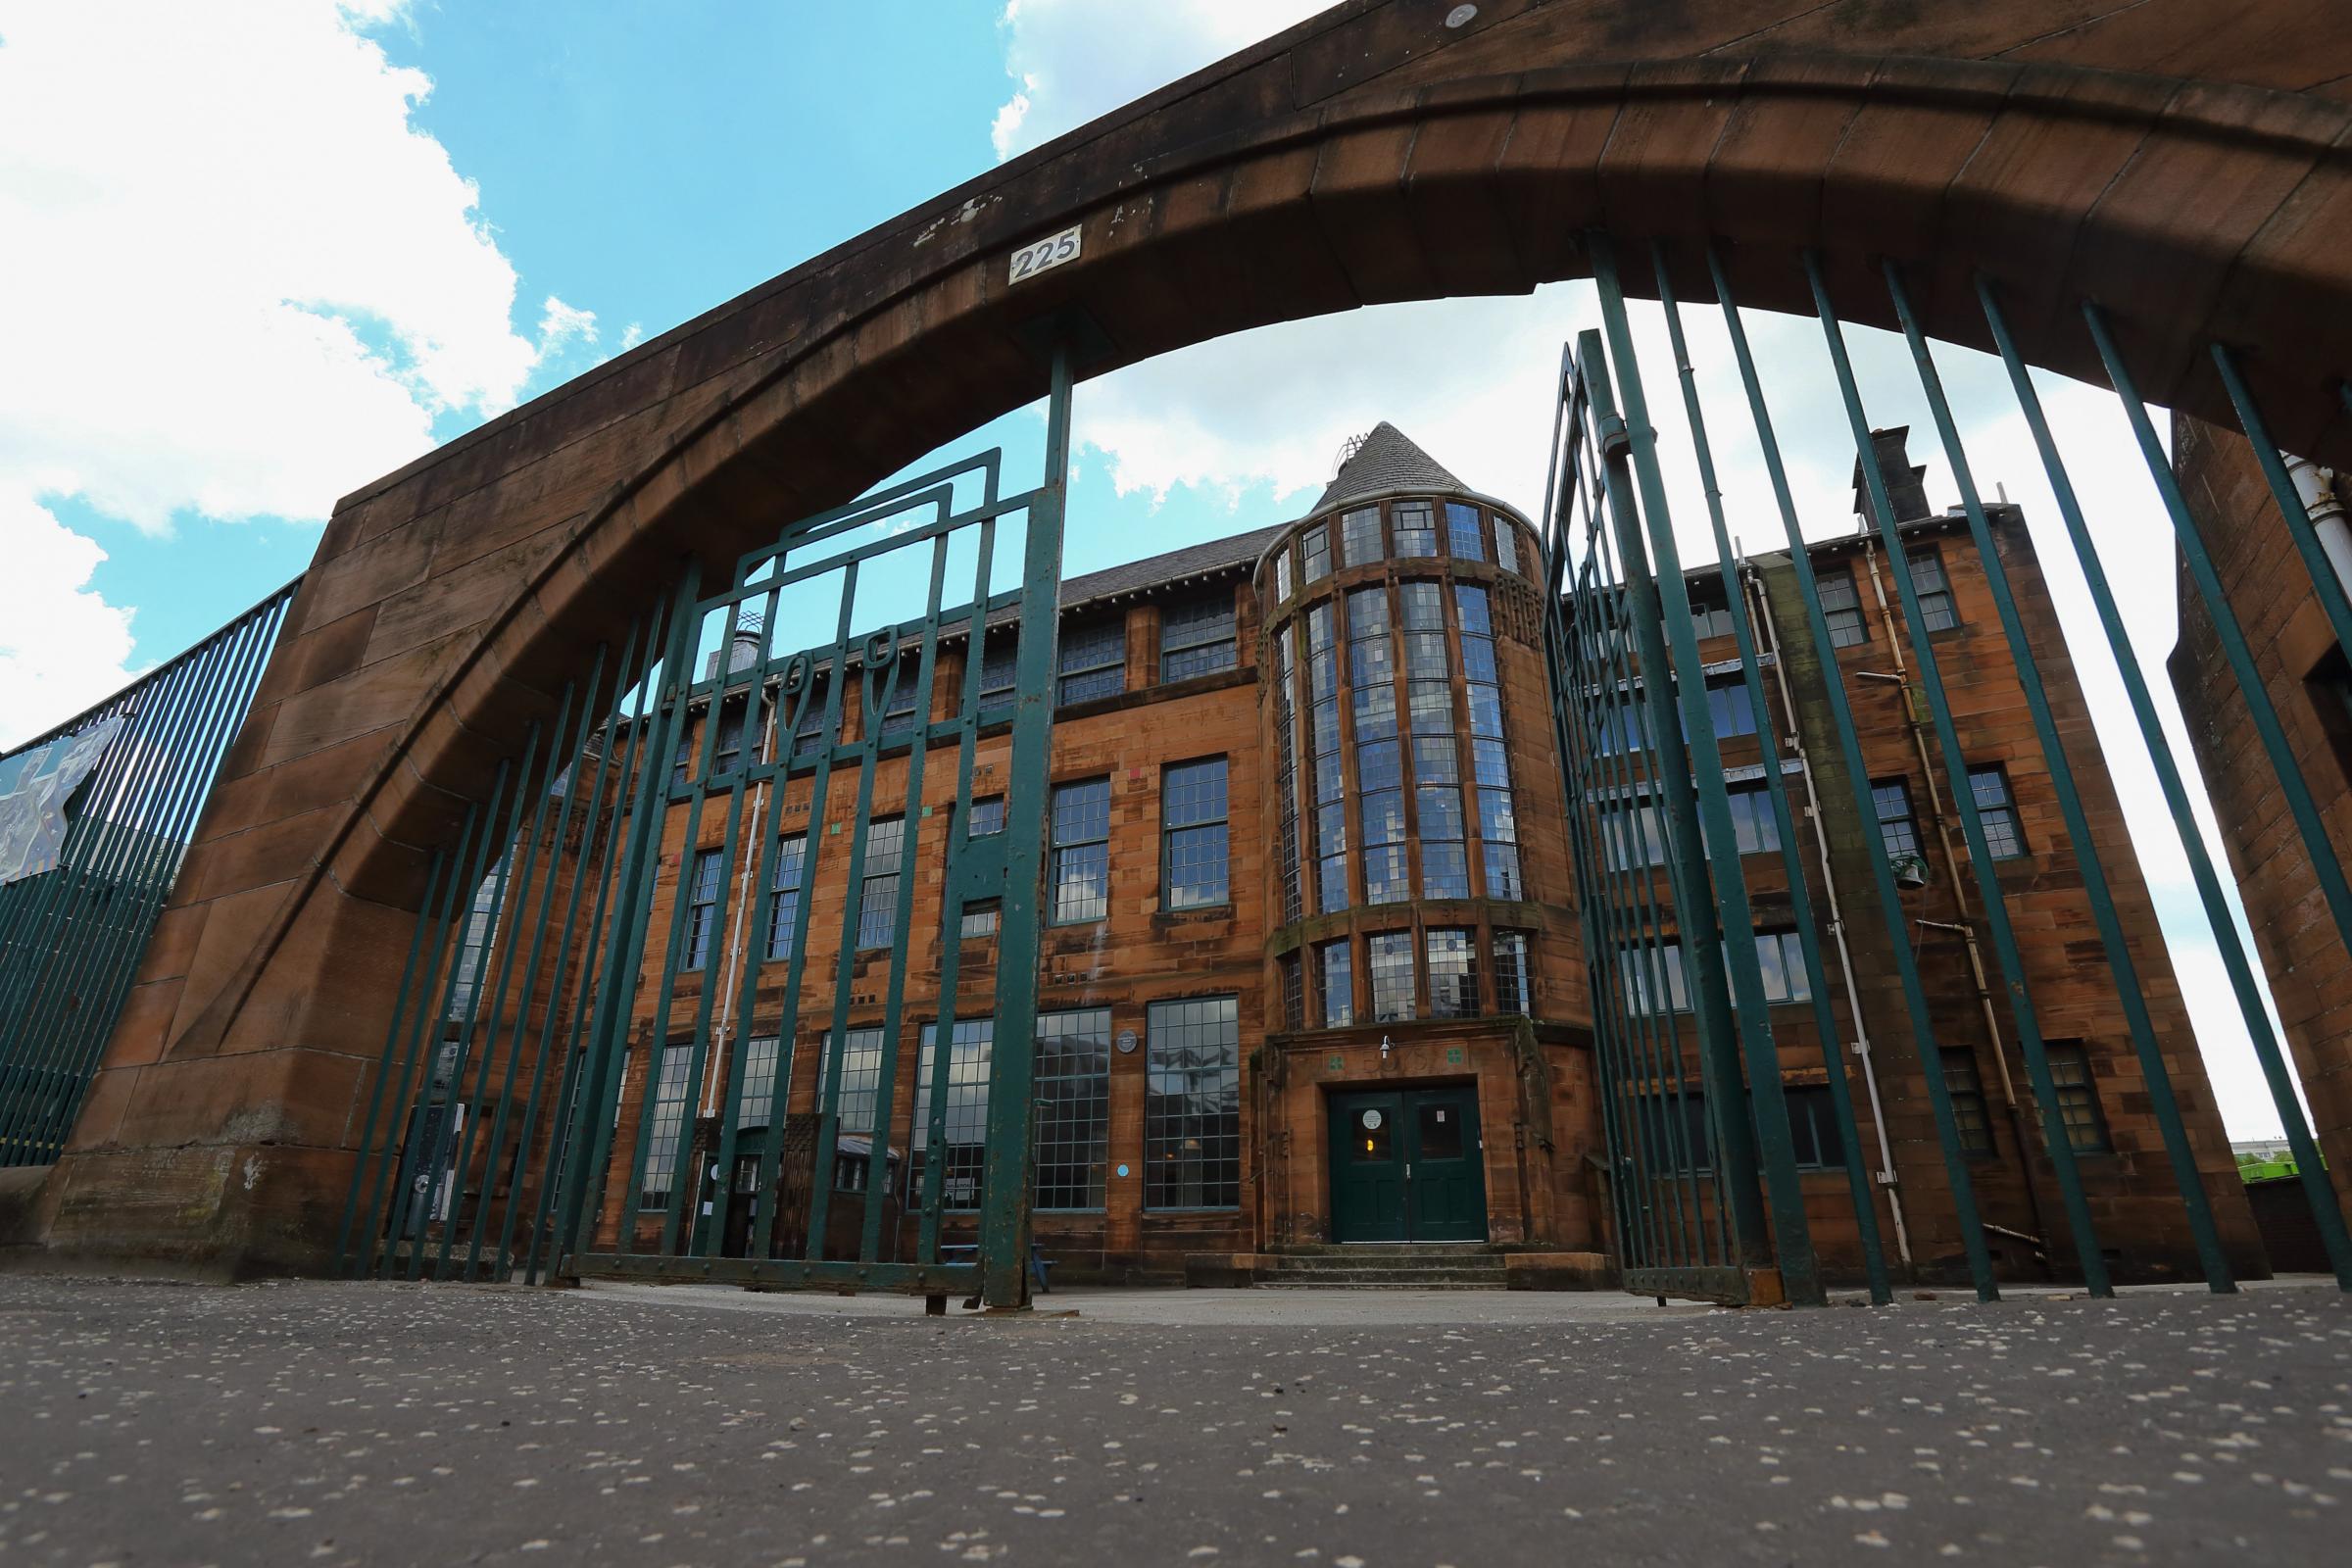 Scotland Street School, Glasgow designed by Charles Rennie Mackintosh.